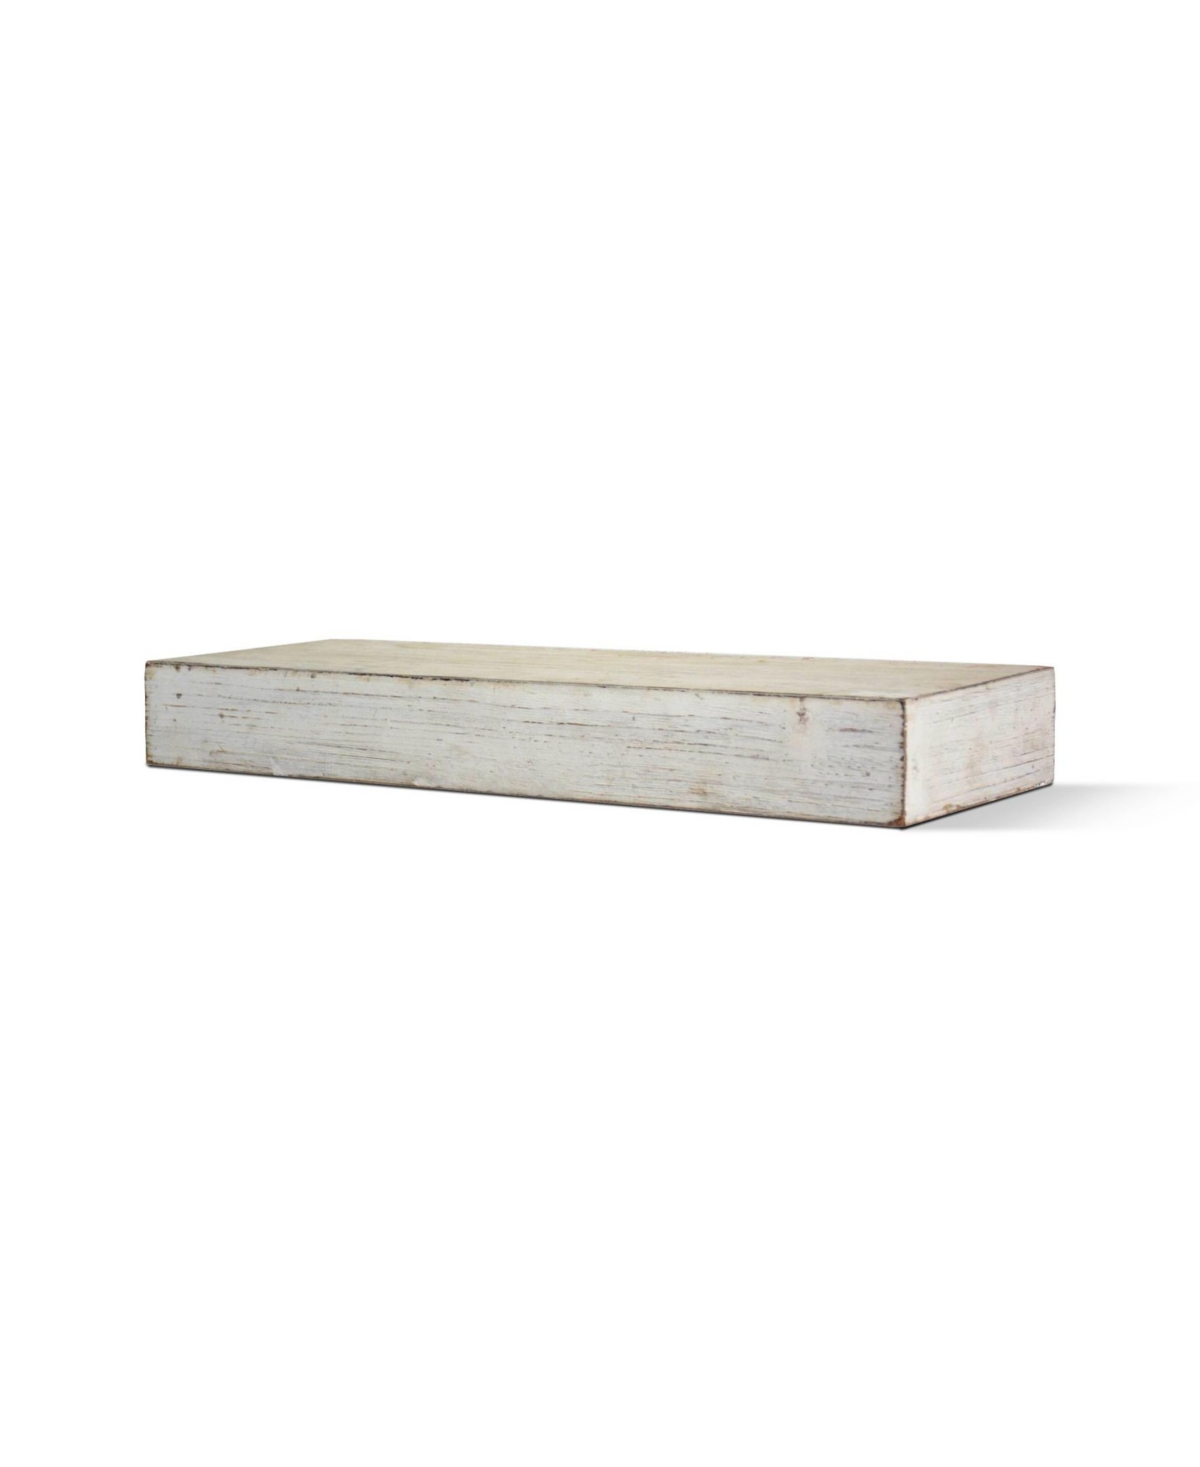 American Art Decor Wood Floating Wall Shelf - Small - White